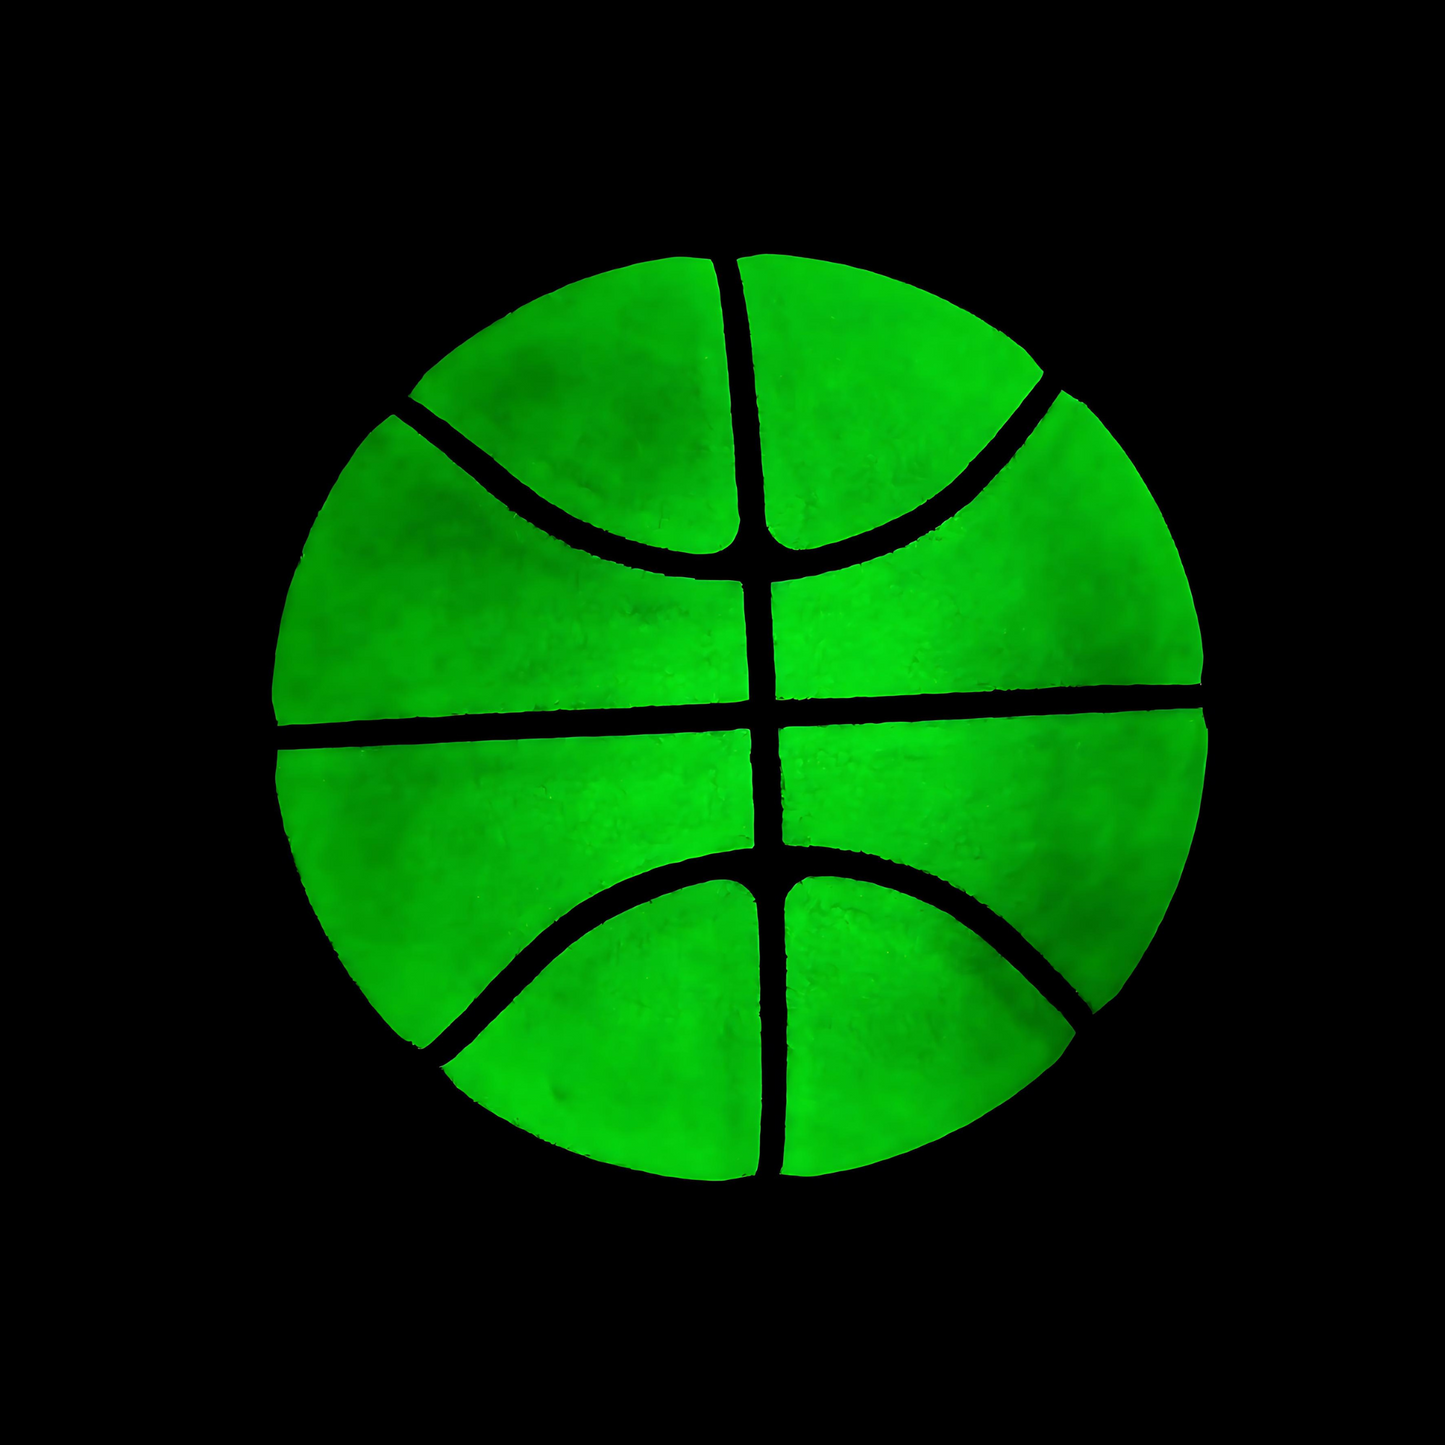 Ballon de basket Green Light